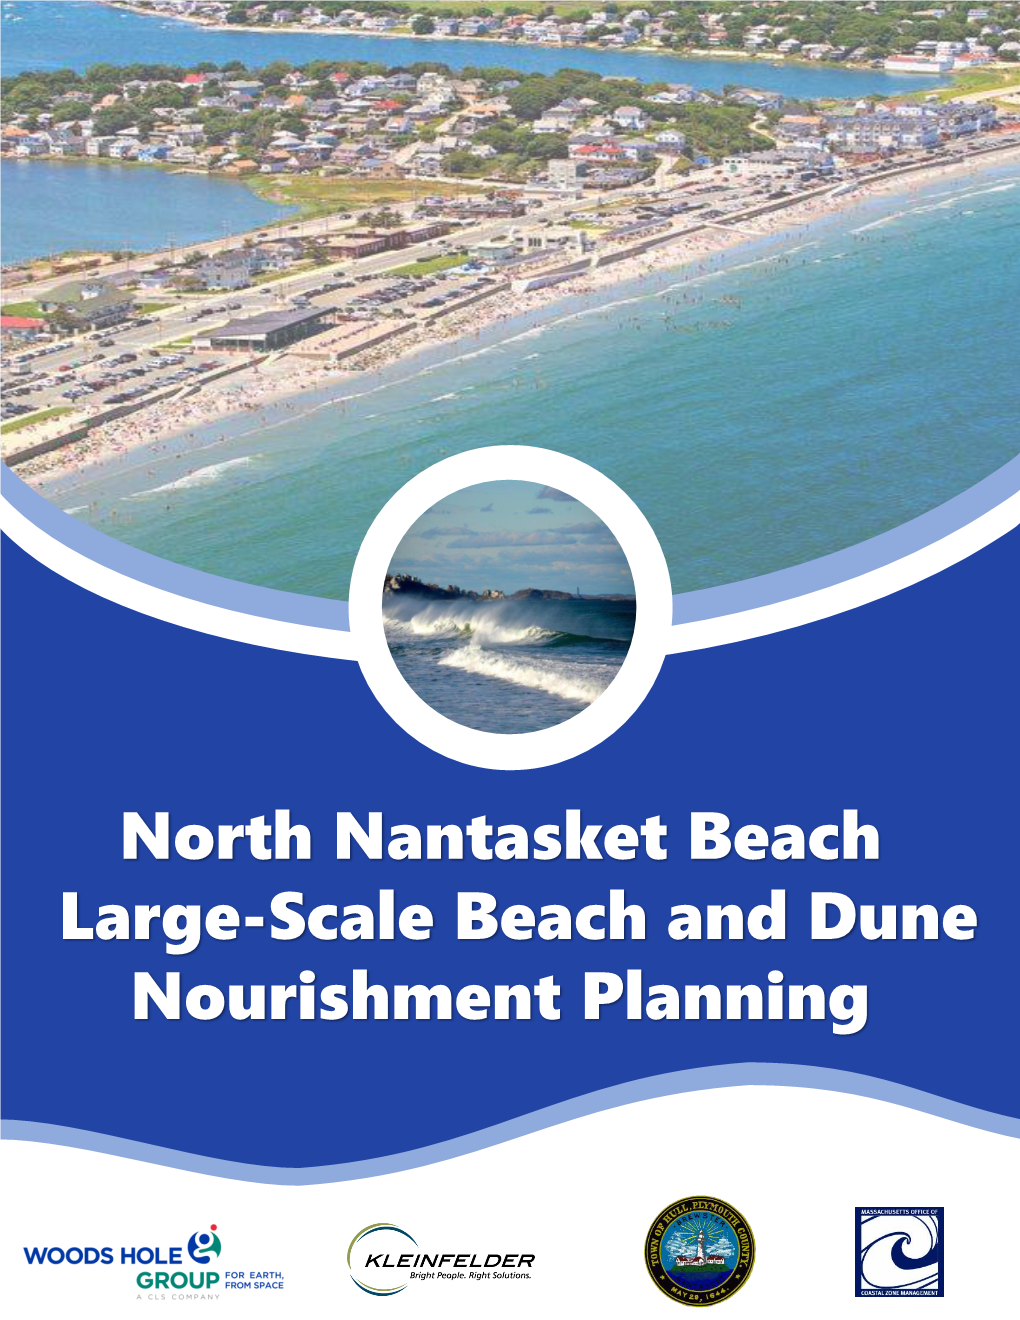 North Nantasket Beach Large-Scale Beach and Dune Nourishment